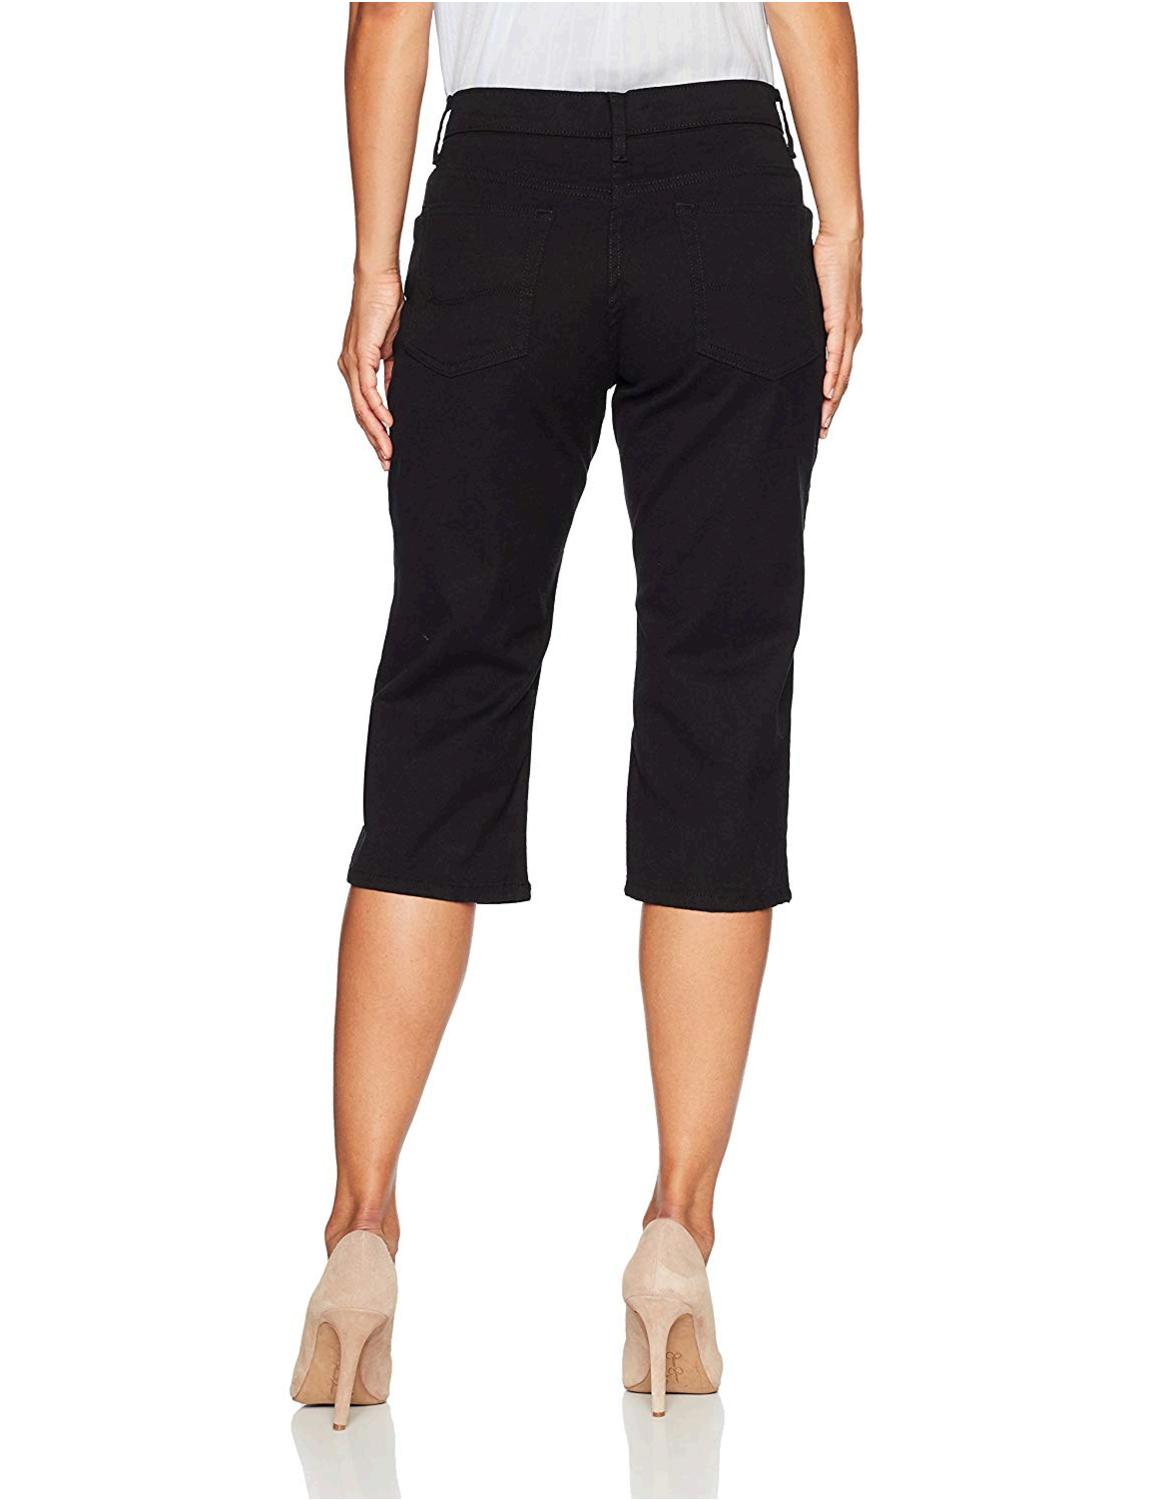 LEE Women's Petite Relaxed Fit Capri Pant, Black, 12, Black, Size 12.0 zdwp